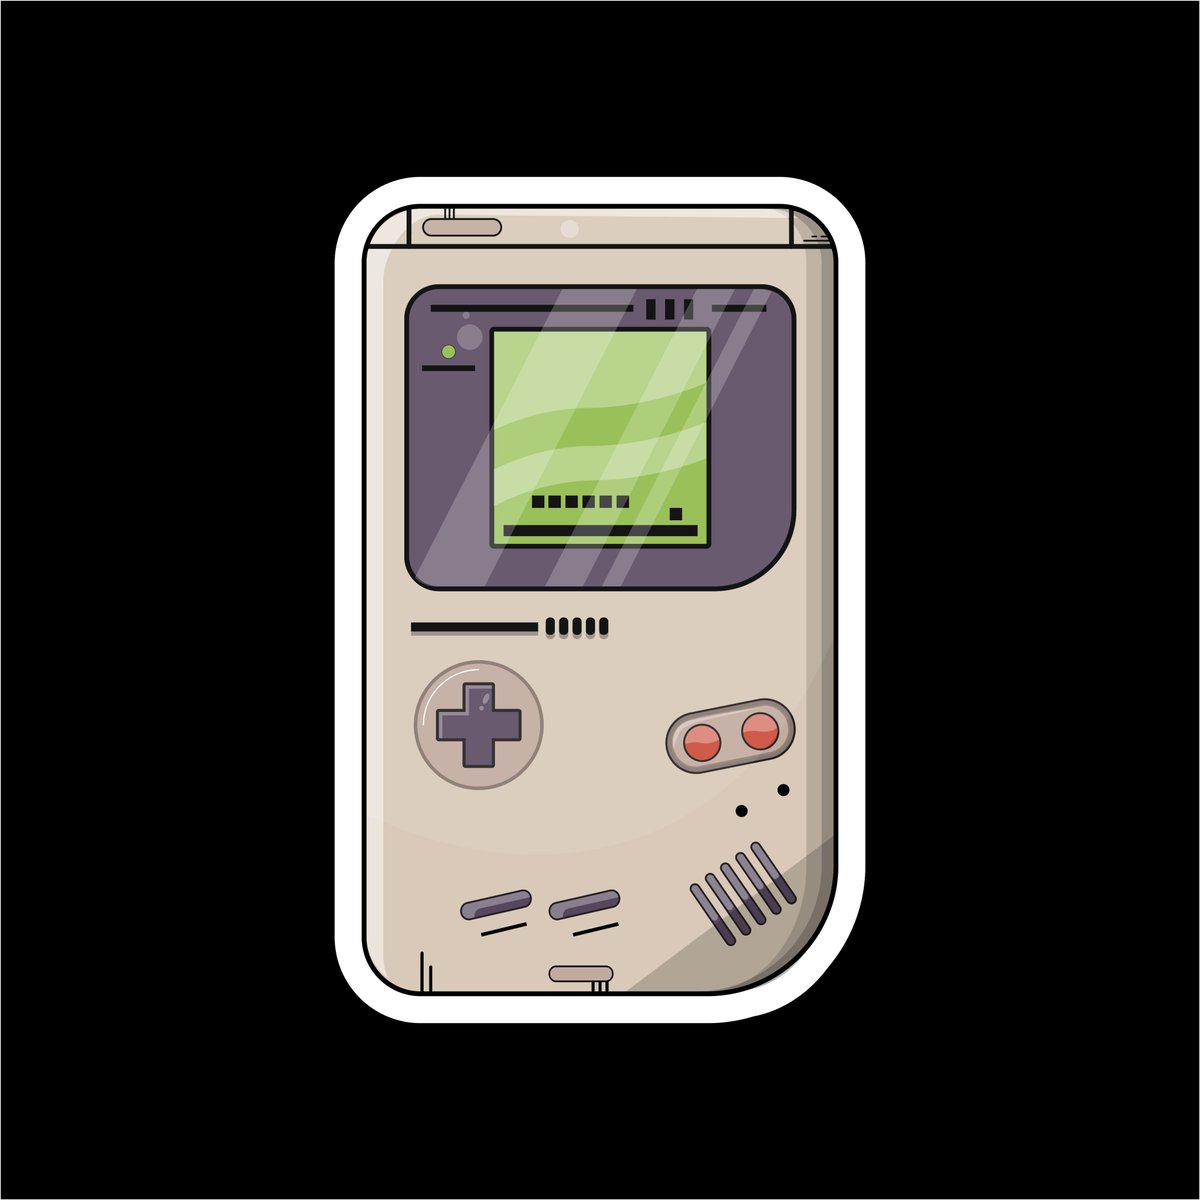 🖐🎮Game Handheld Evolution 🎮🖐 #flatdesign #game #handheld #handheldgaming #stickers #sticker #GraphicDesign